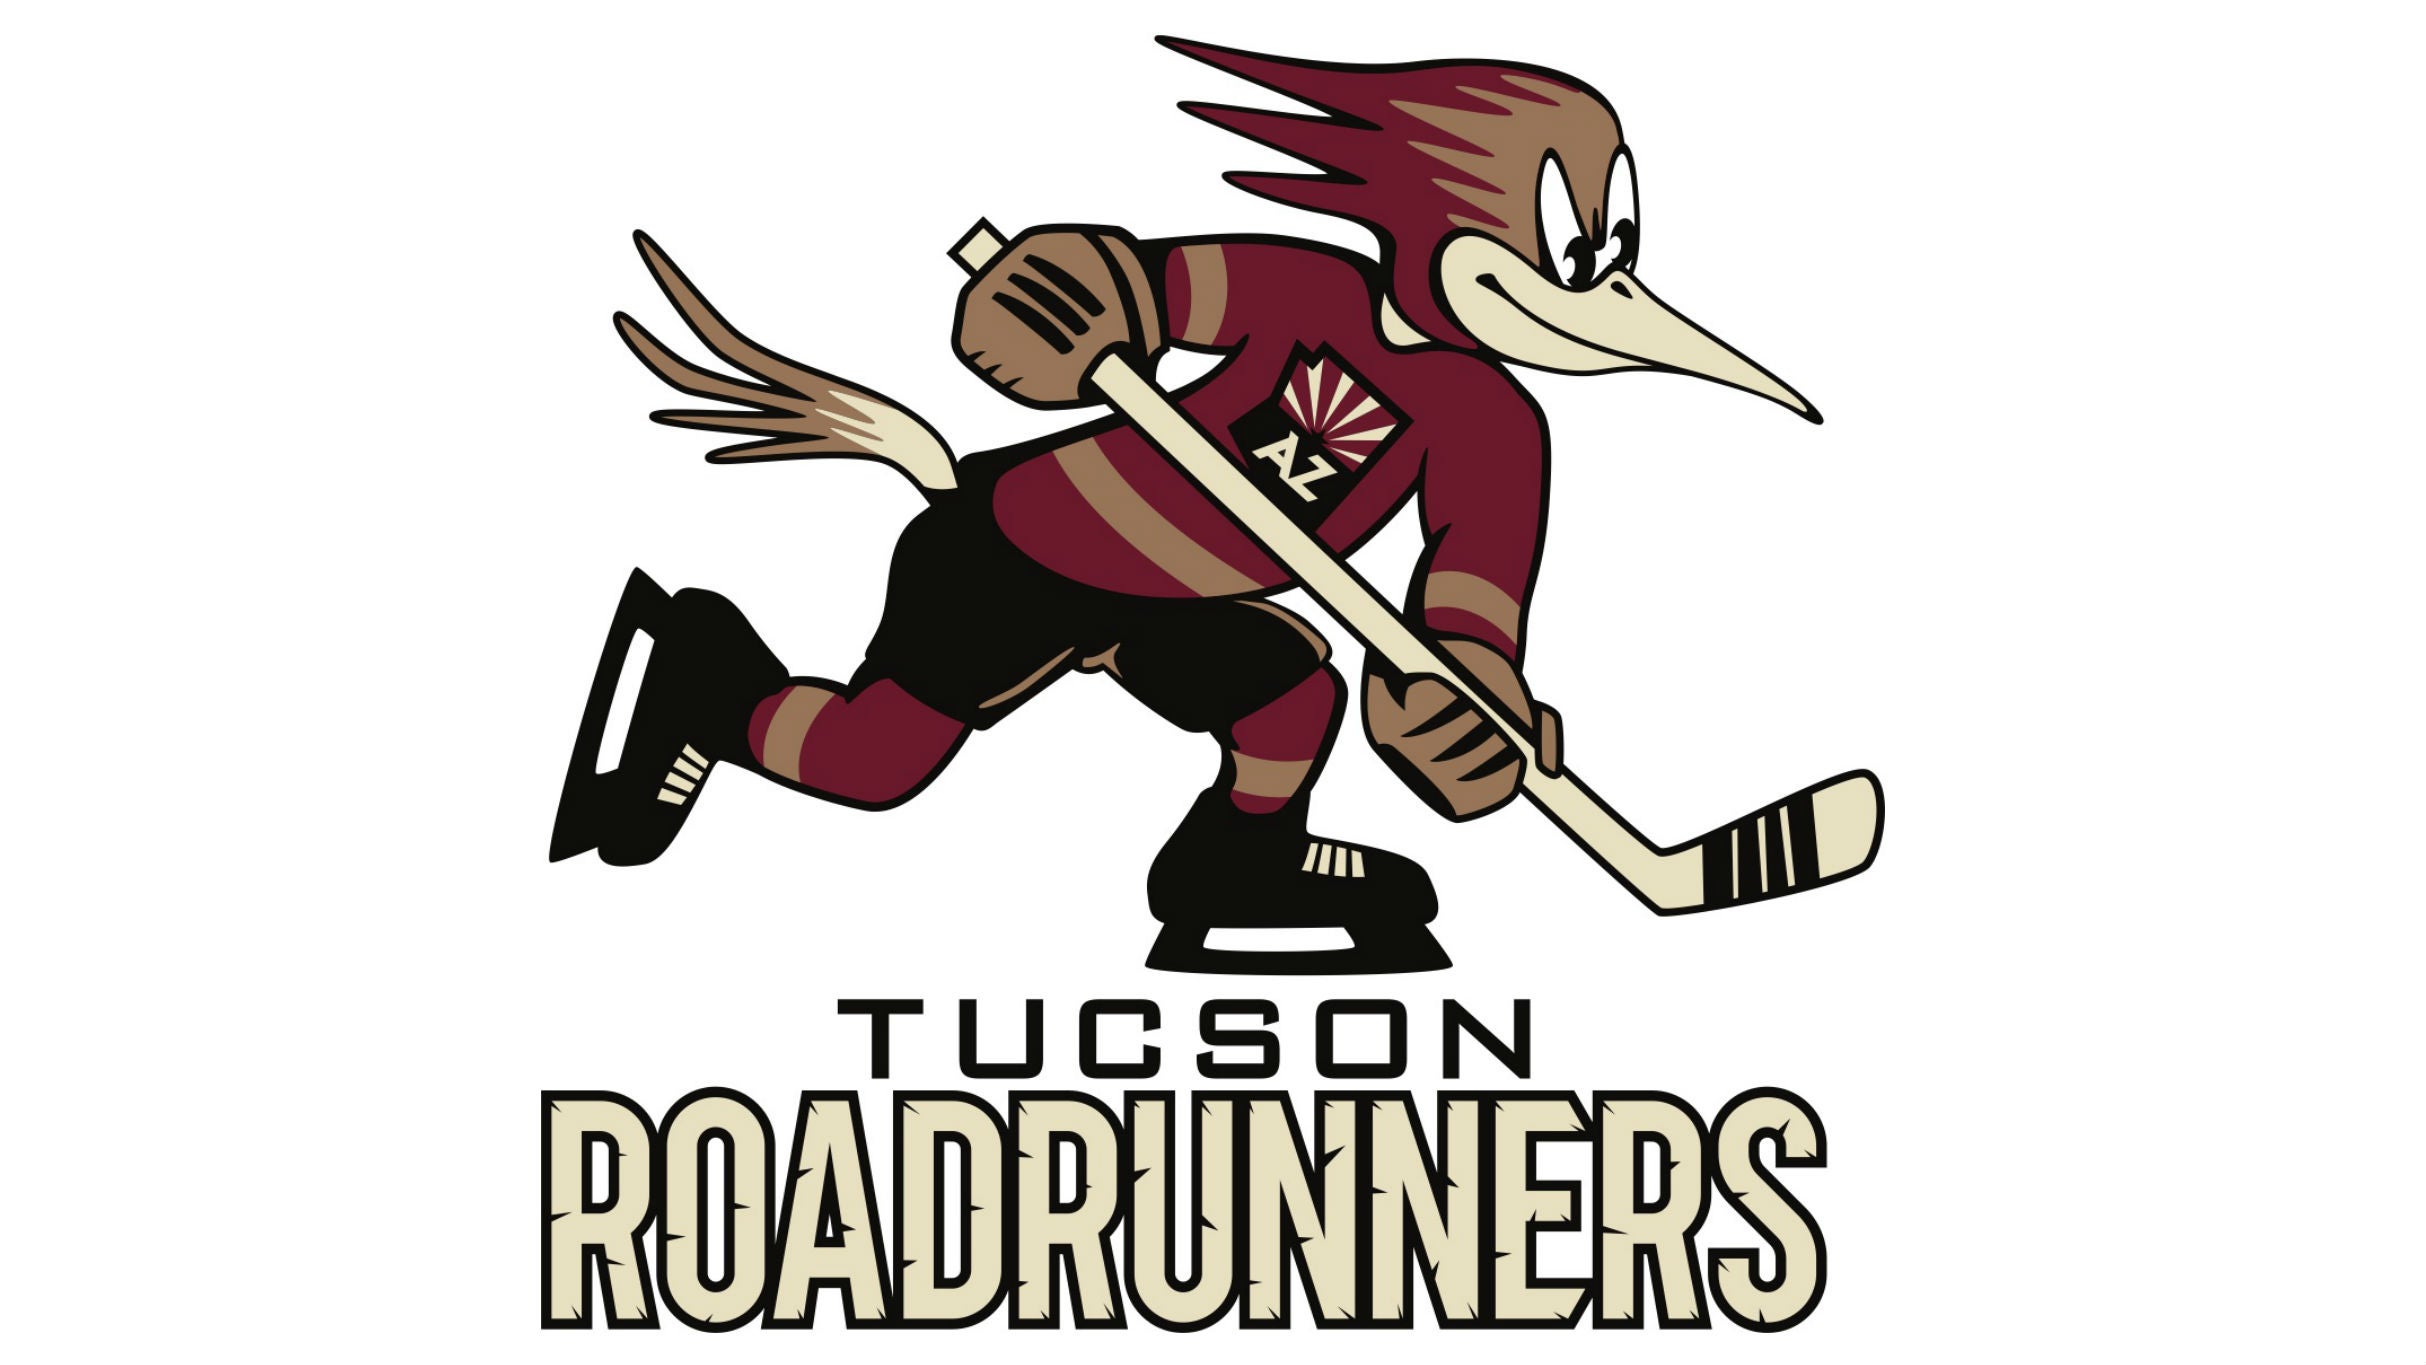 Tucson Roadrunners Game 3 at Tucson Arena